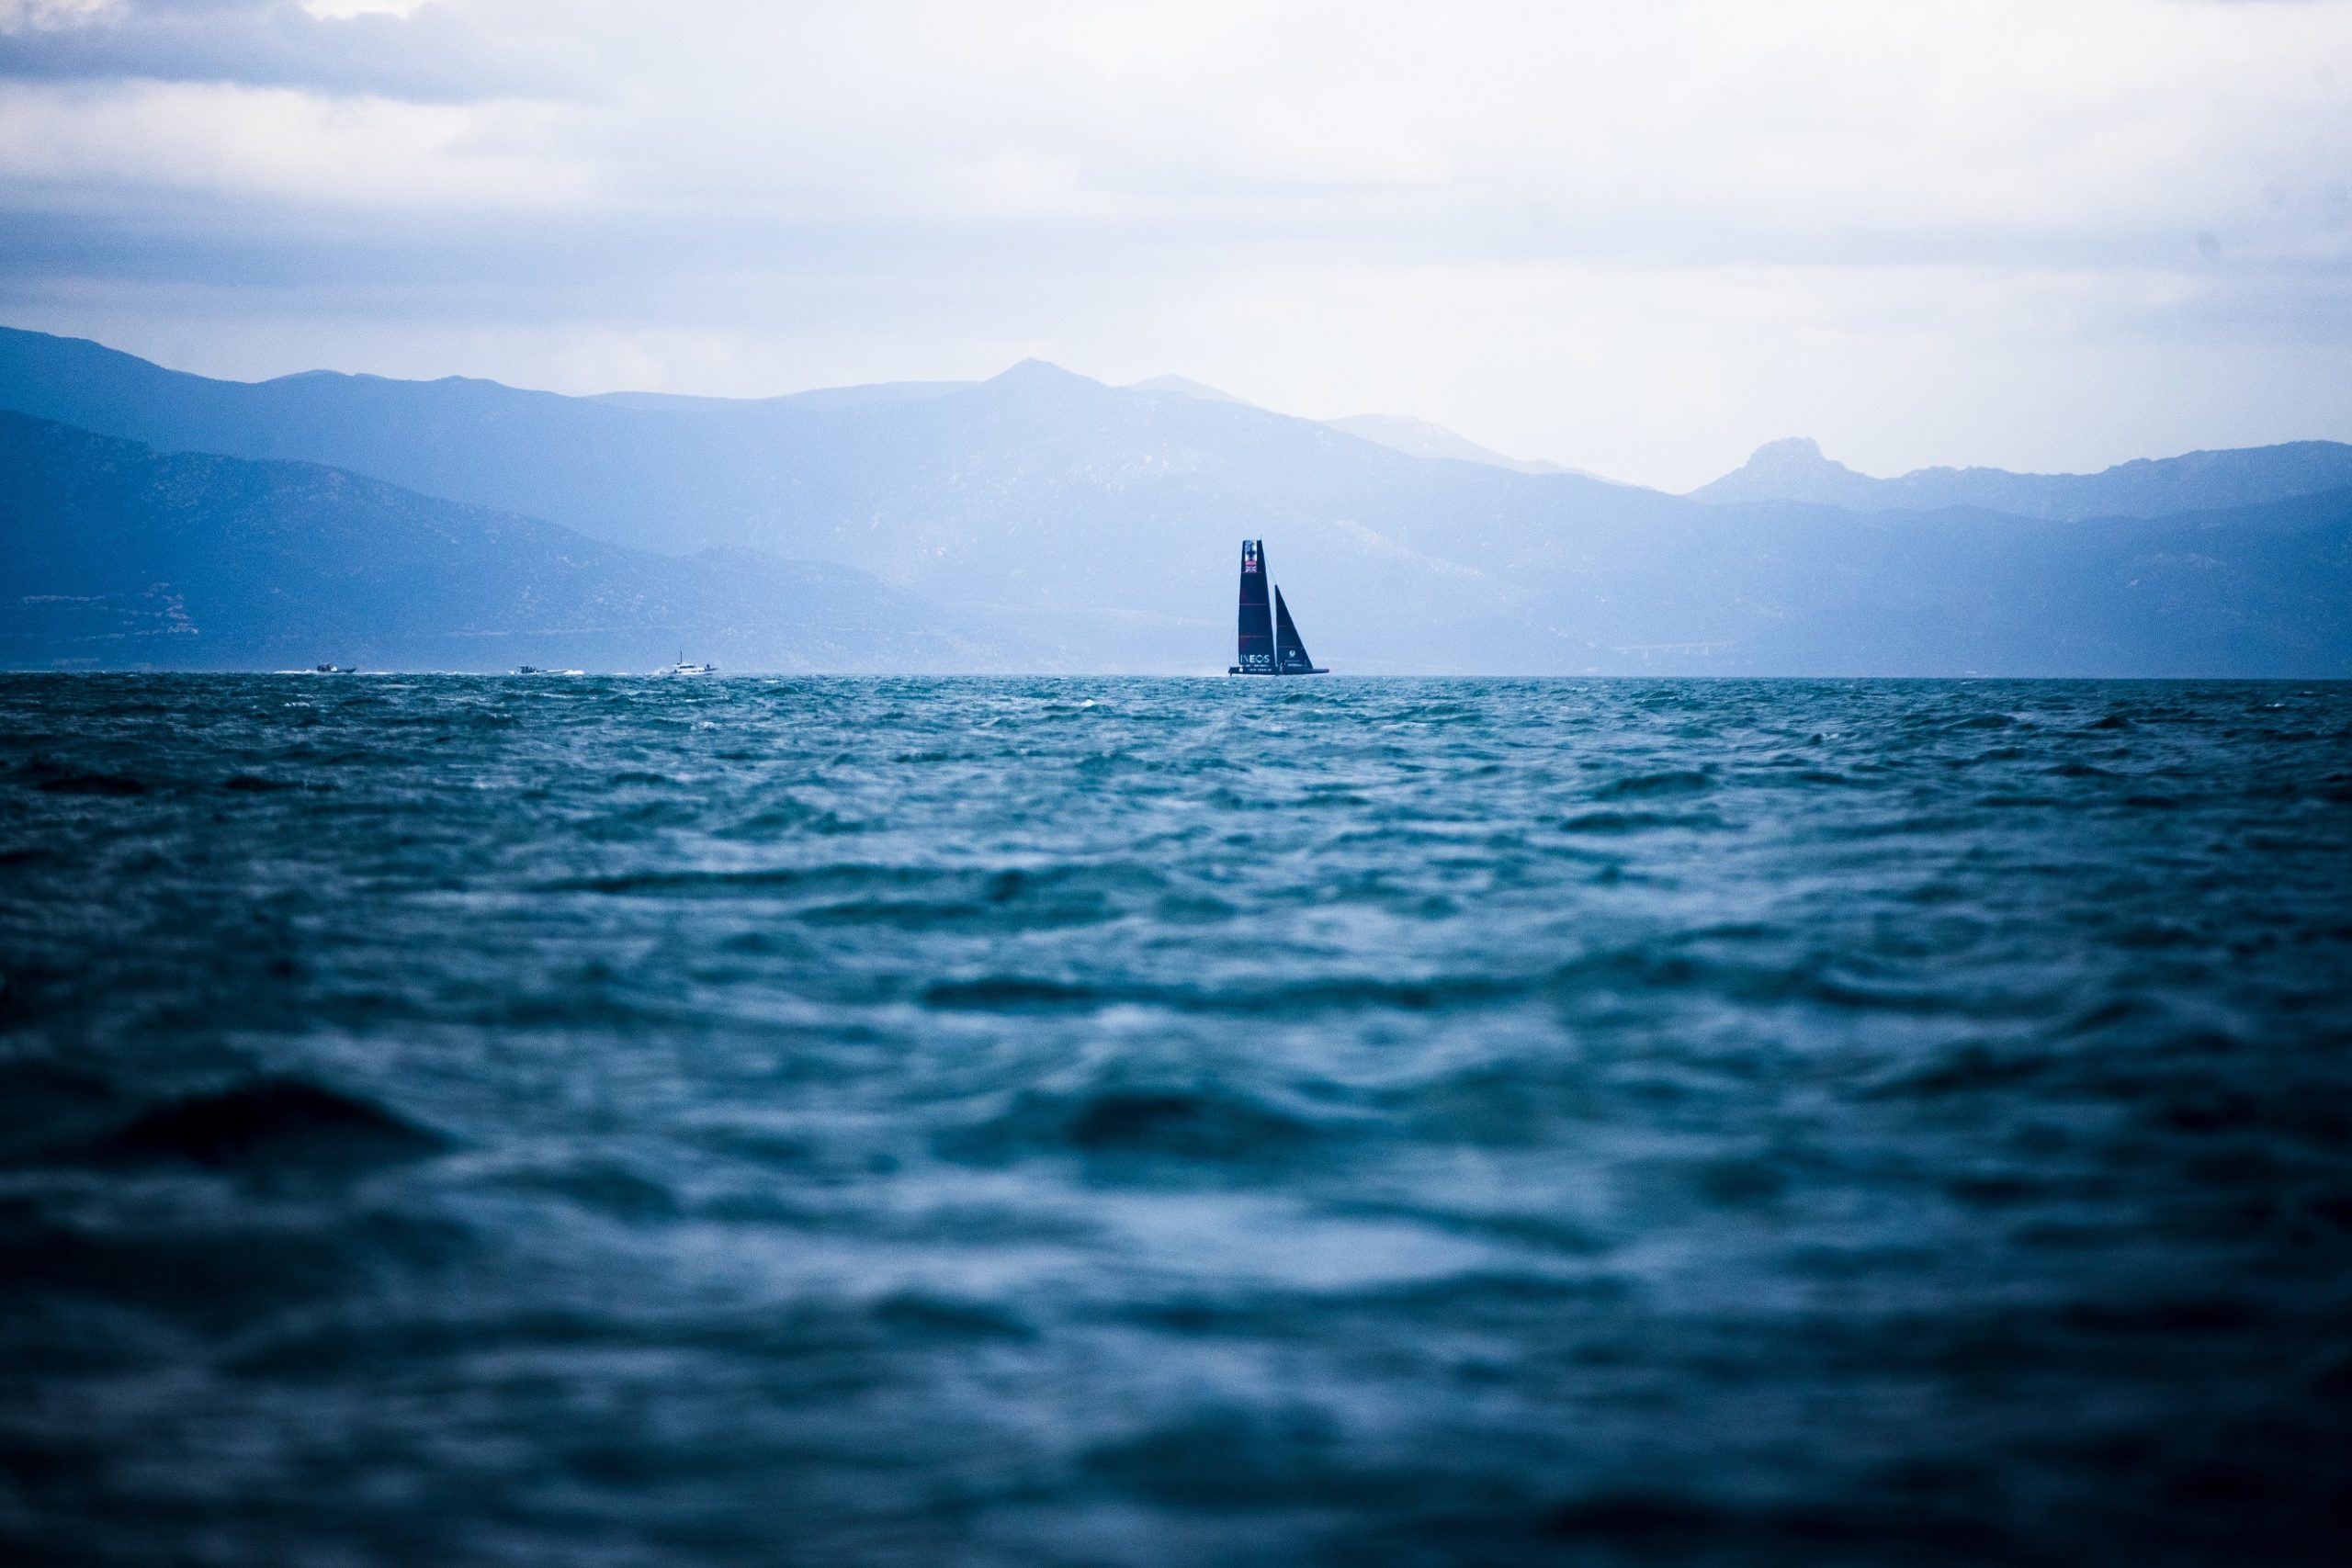 Sailboat on the horizon